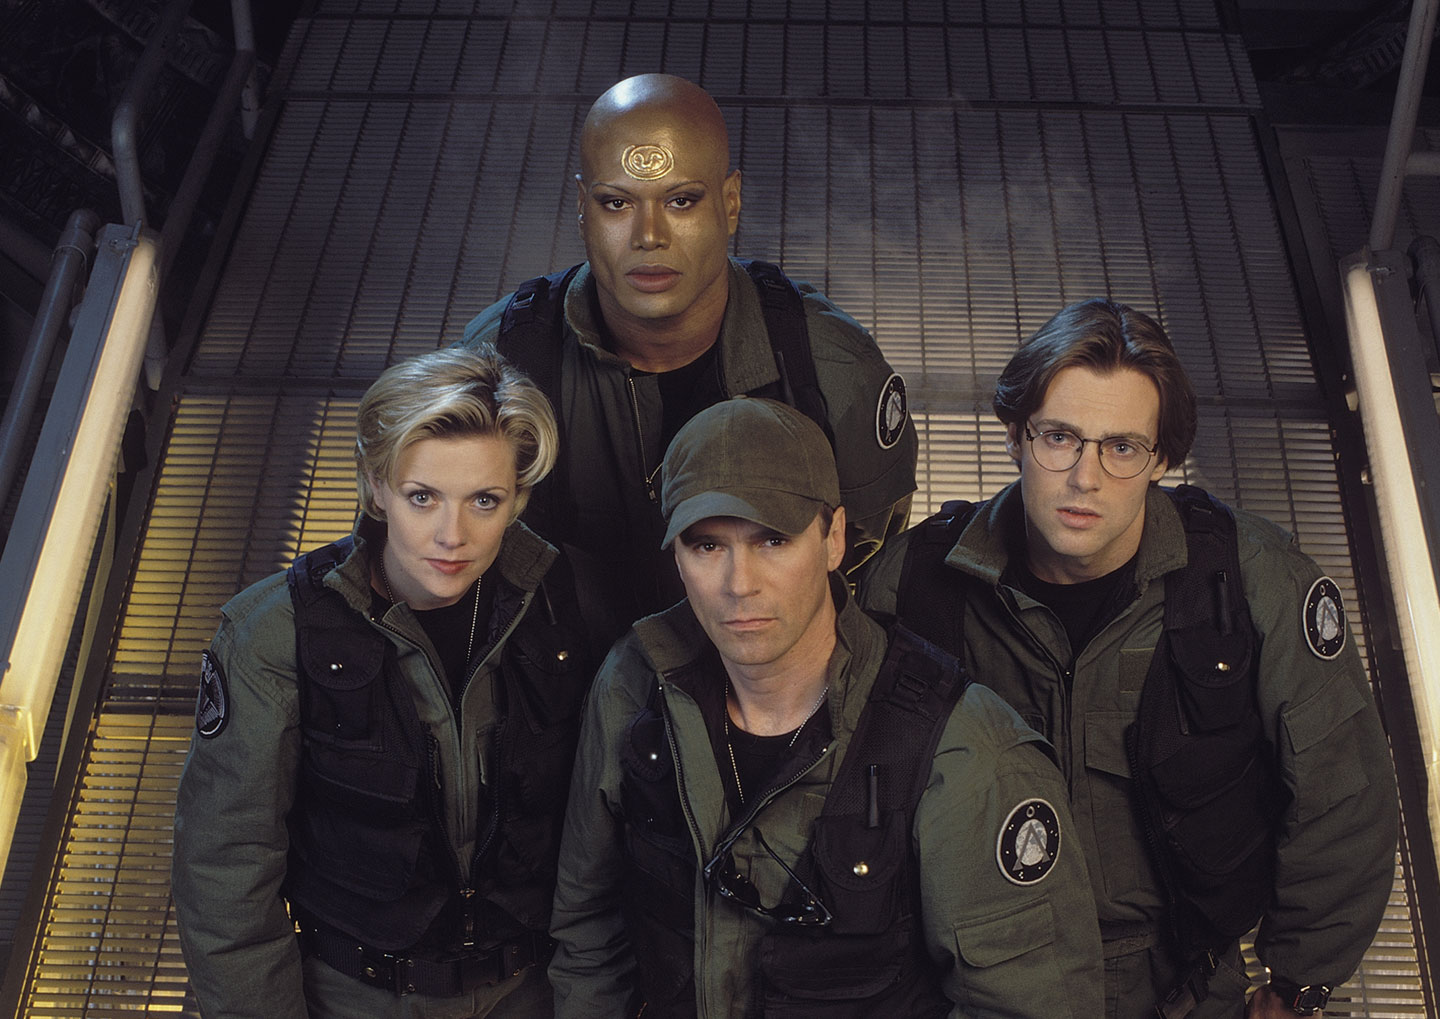 Stargate SG-1 header image.